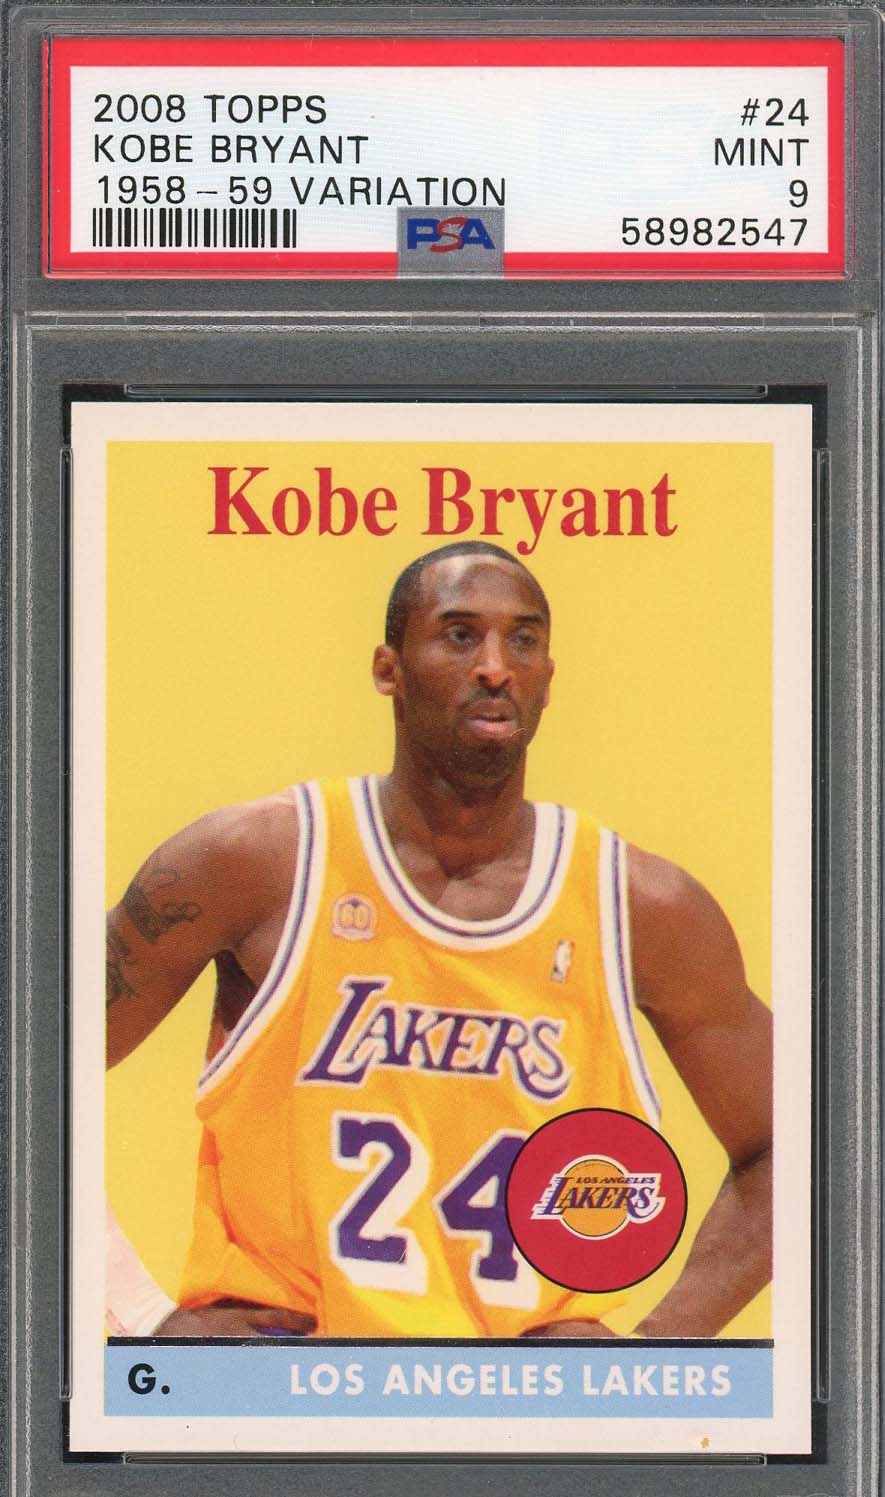 2008 Topps Kobe Bryant (w. LeBron James)